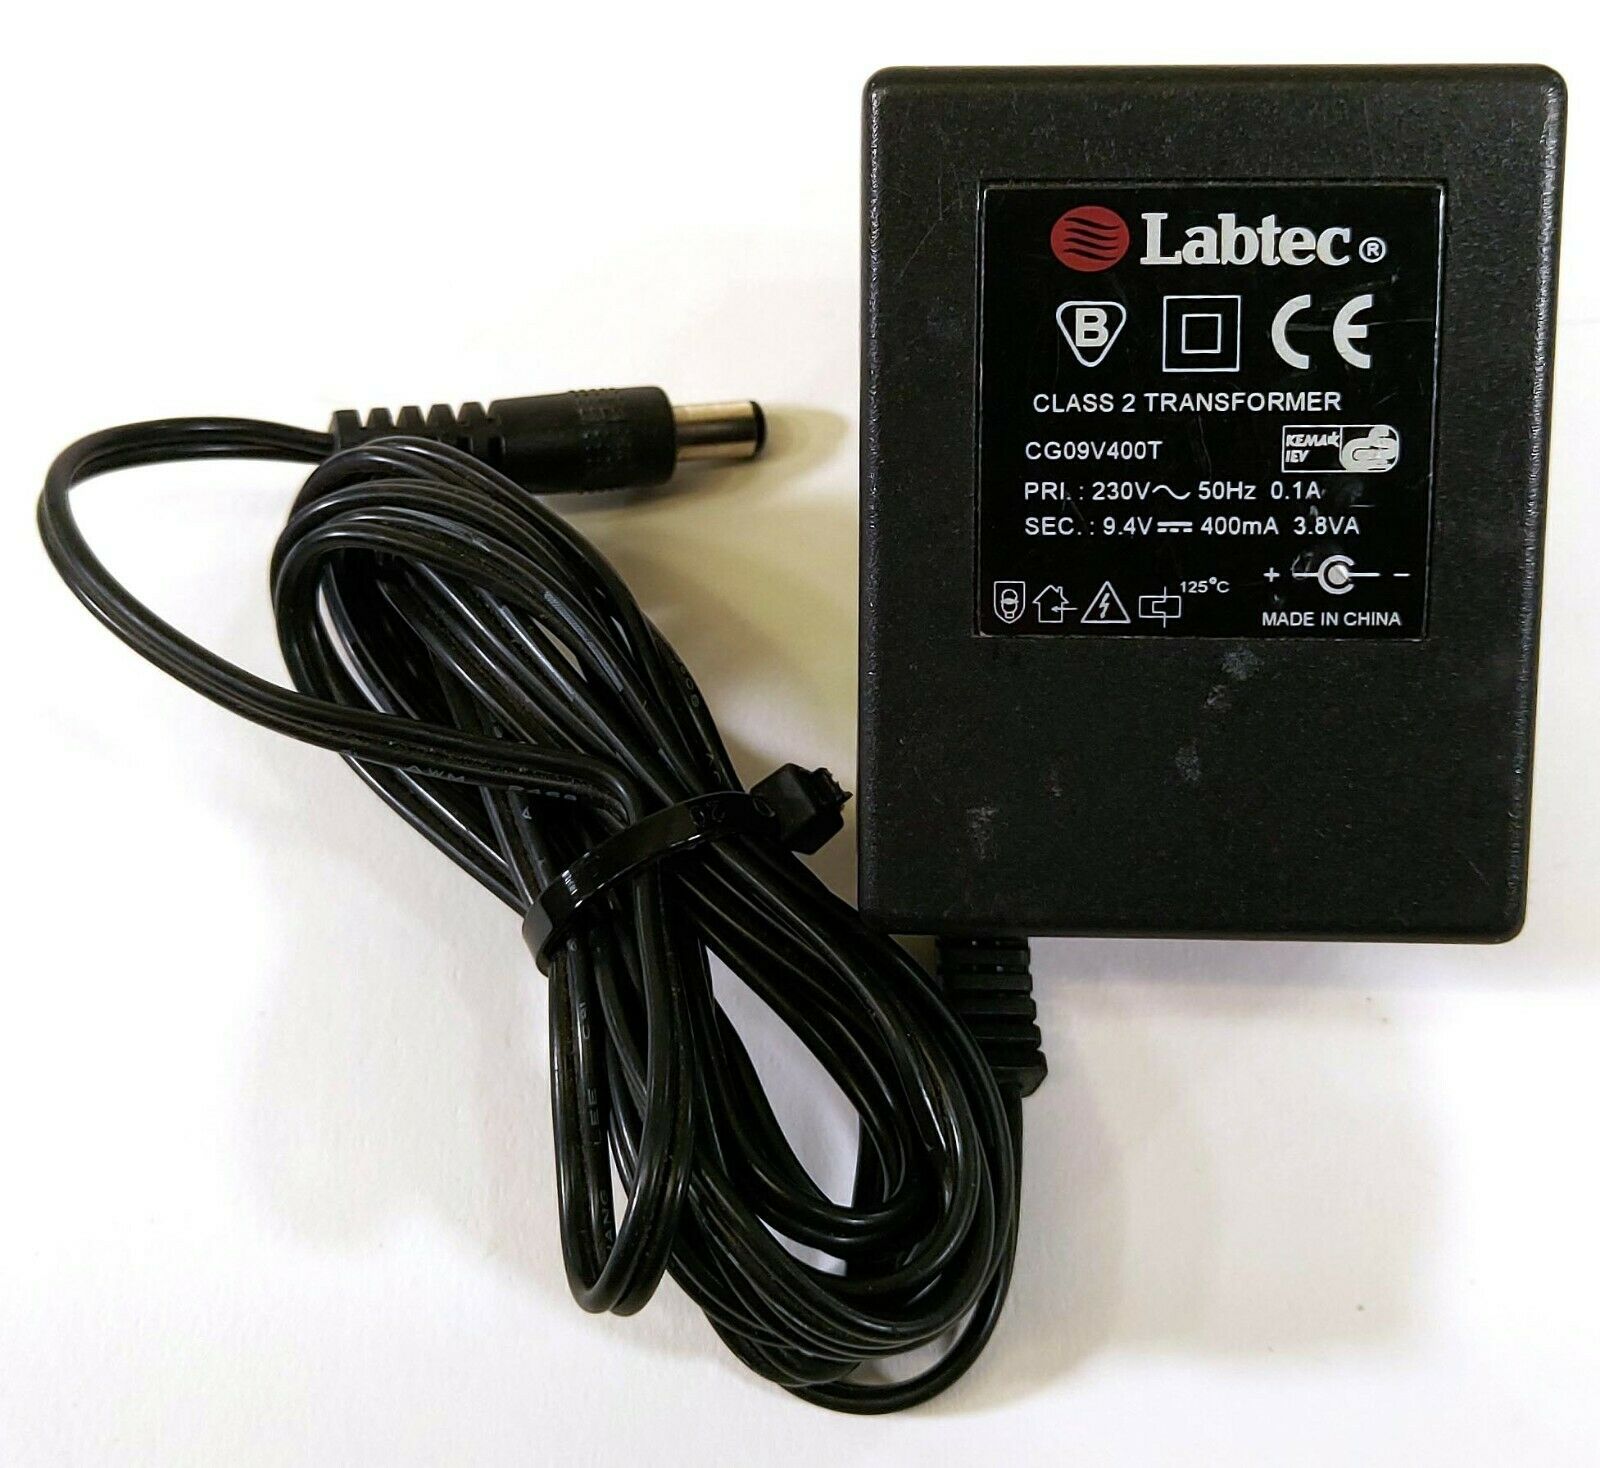 Labtec CG09V400T Transformer AC/DC Adapter 9.4V 400mA Original Charger D437 Output Current: 400 - Click Image to Close